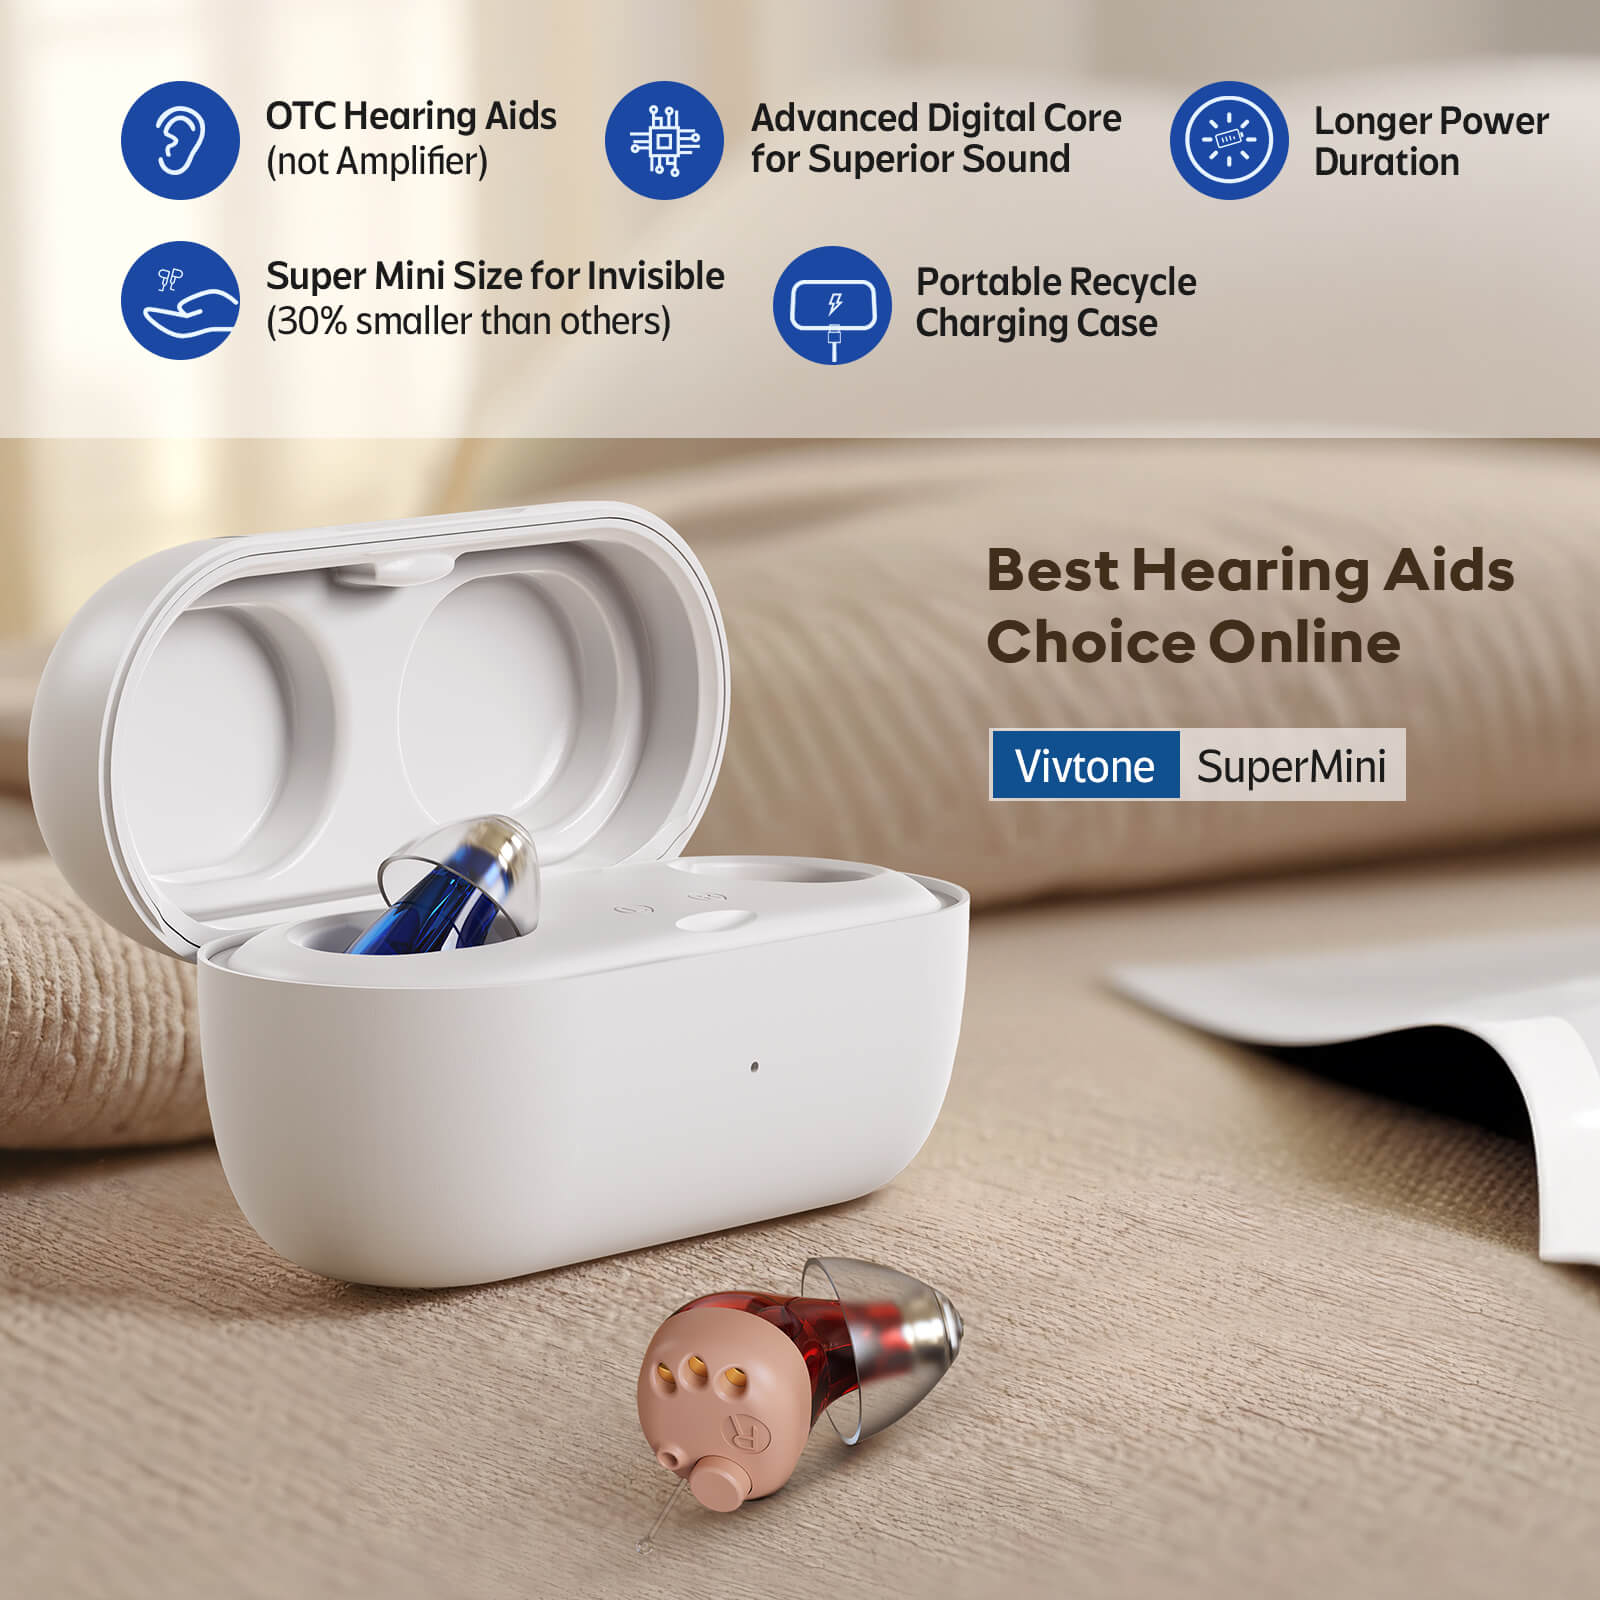 2-vivtone super mini hearing aids-best choice online